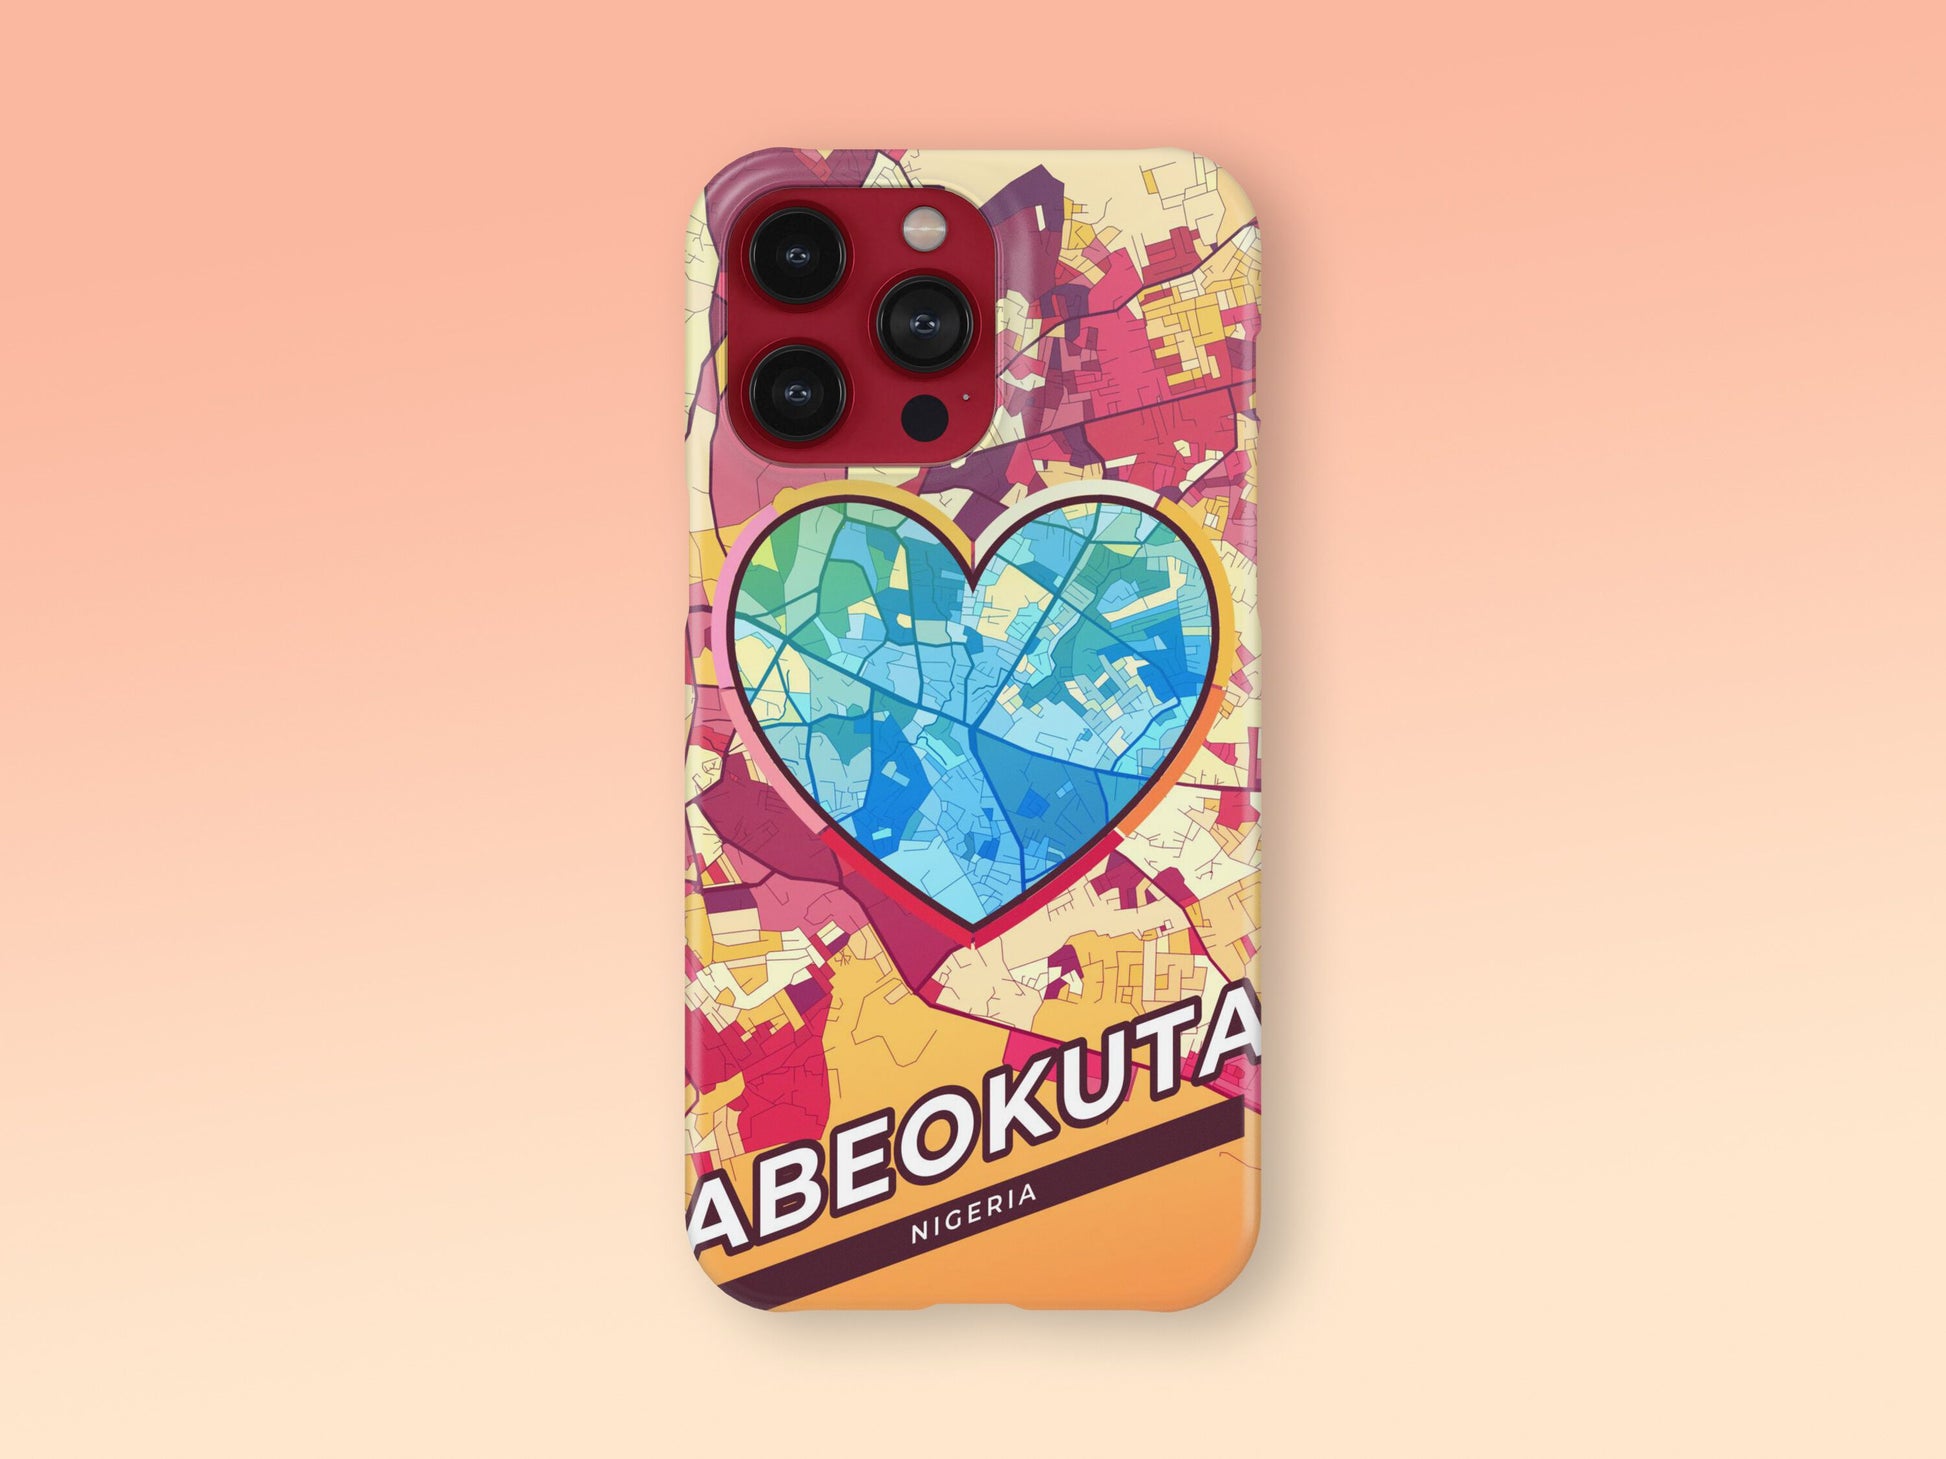 Abeokuta Nigeria slim phone case with colorful icon. Birthday, wedding or housewarming gift. Couple match cases. 2